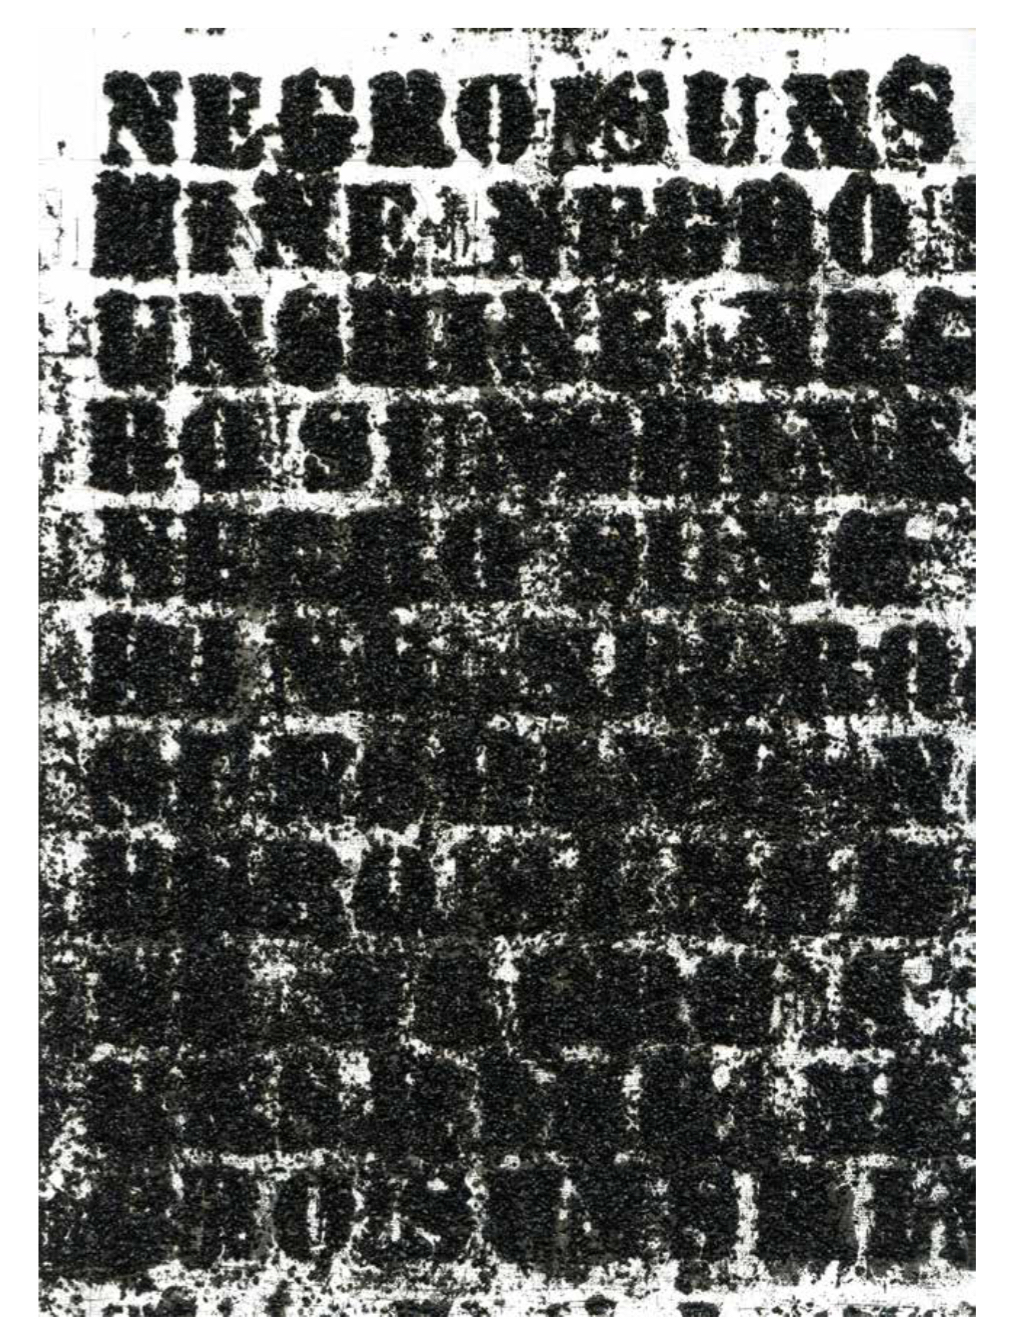 Glenn Ligon

Study for Negro Sunshine #111, 2012

Oilstick, coaldust and gesso on paper

12 x 9 inches